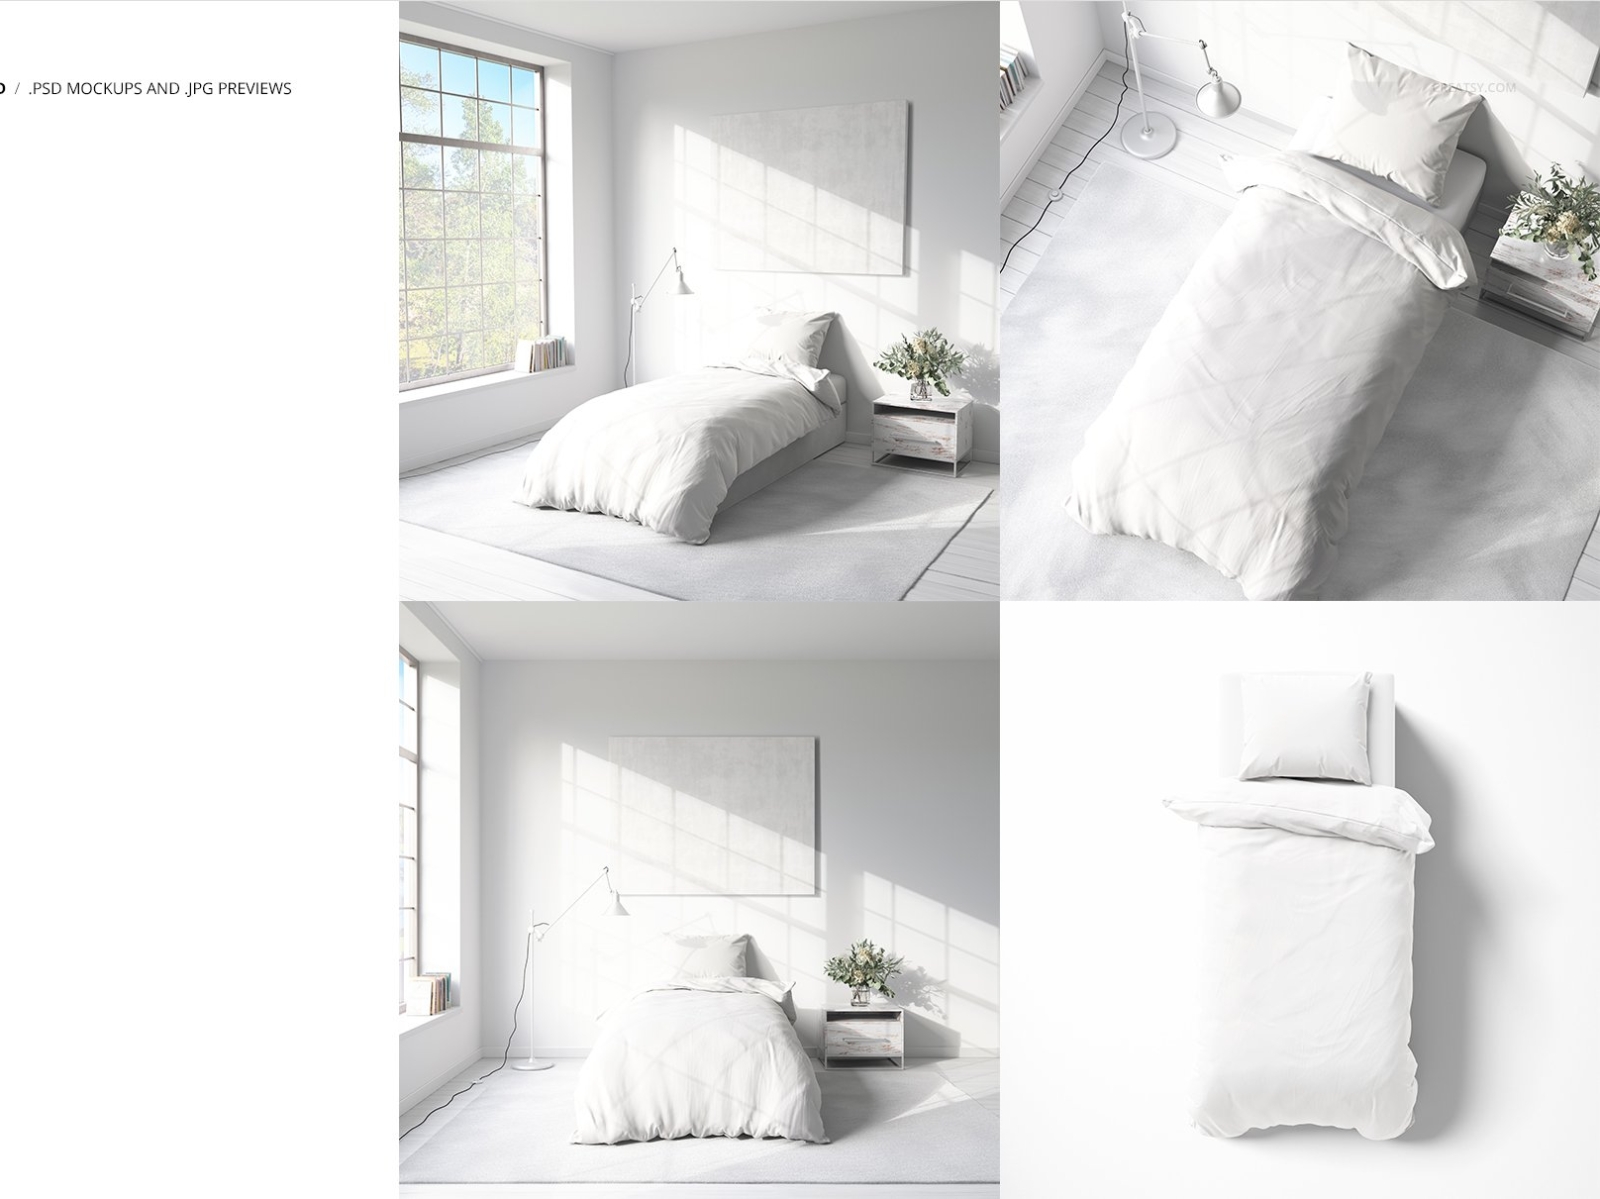 Download Single Bed Bedding Mockup Set By Mockup5 On Dribbble PSD Mockup Templates